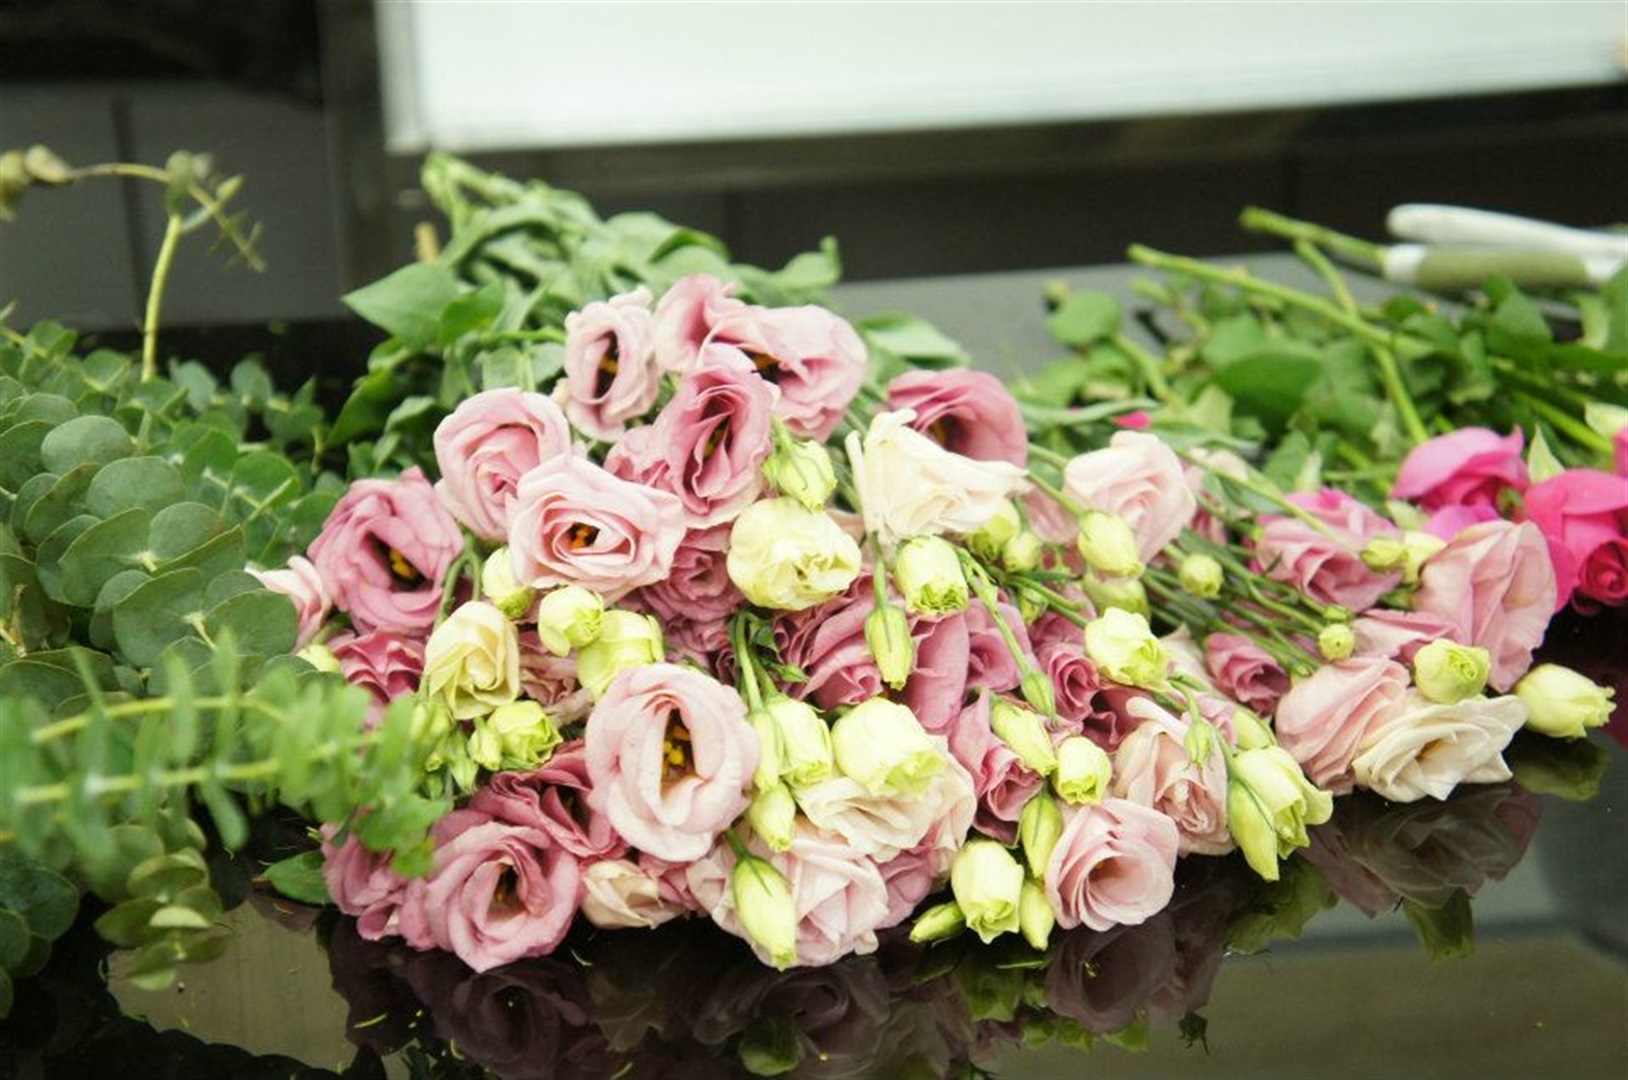 French Floral Art and Design – Wedding Arrangements